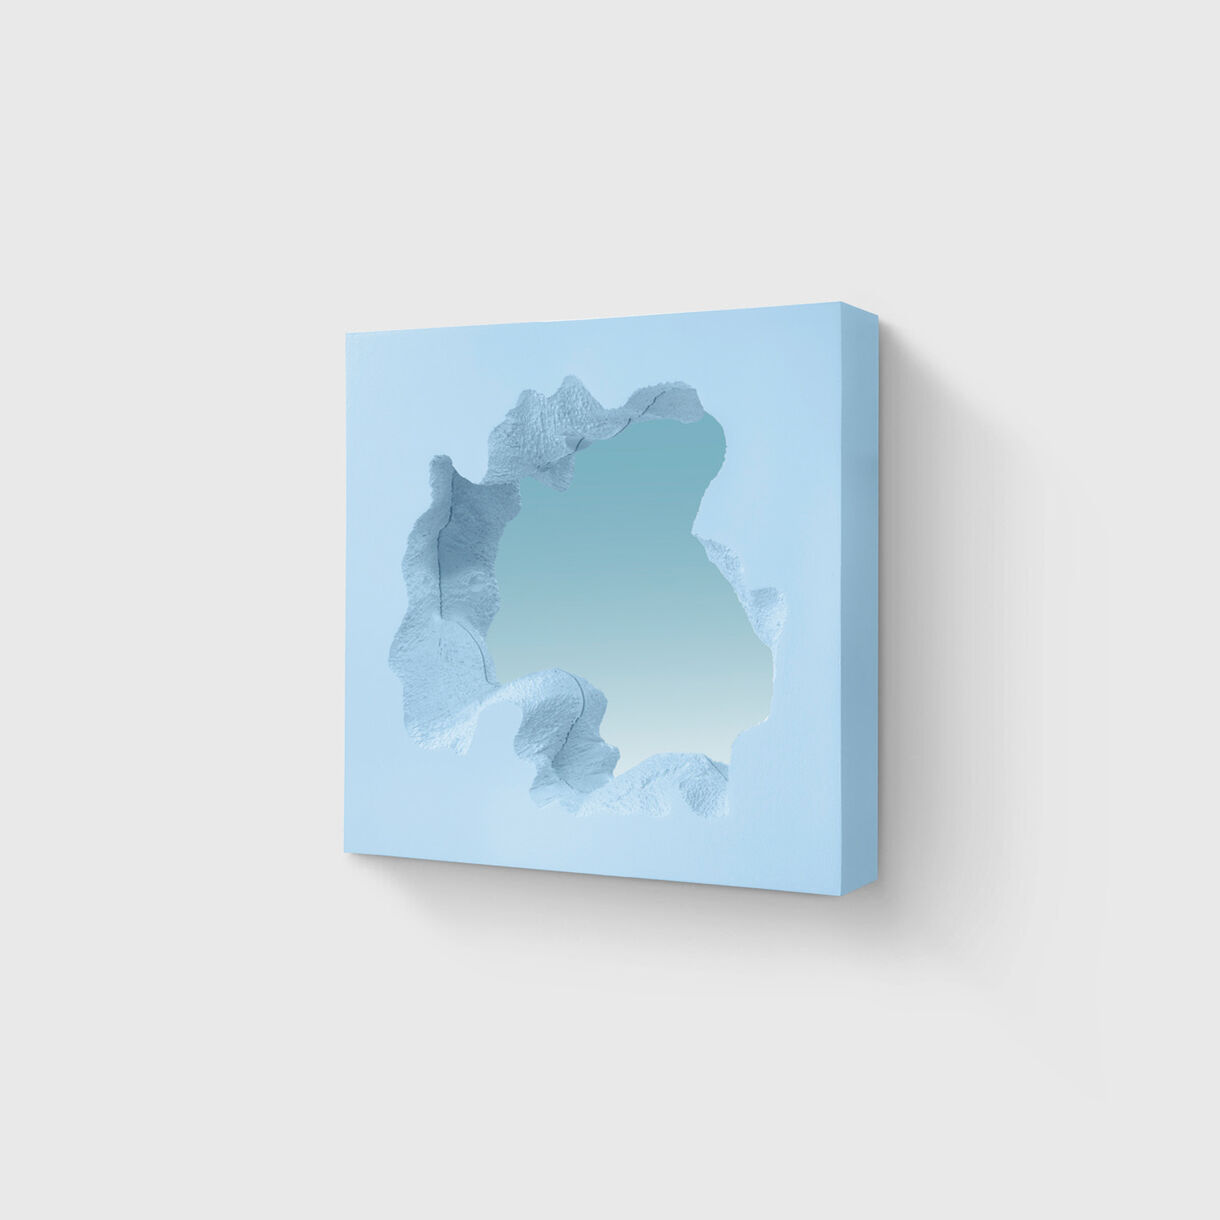 Broken Square Mirror, Blue Edition